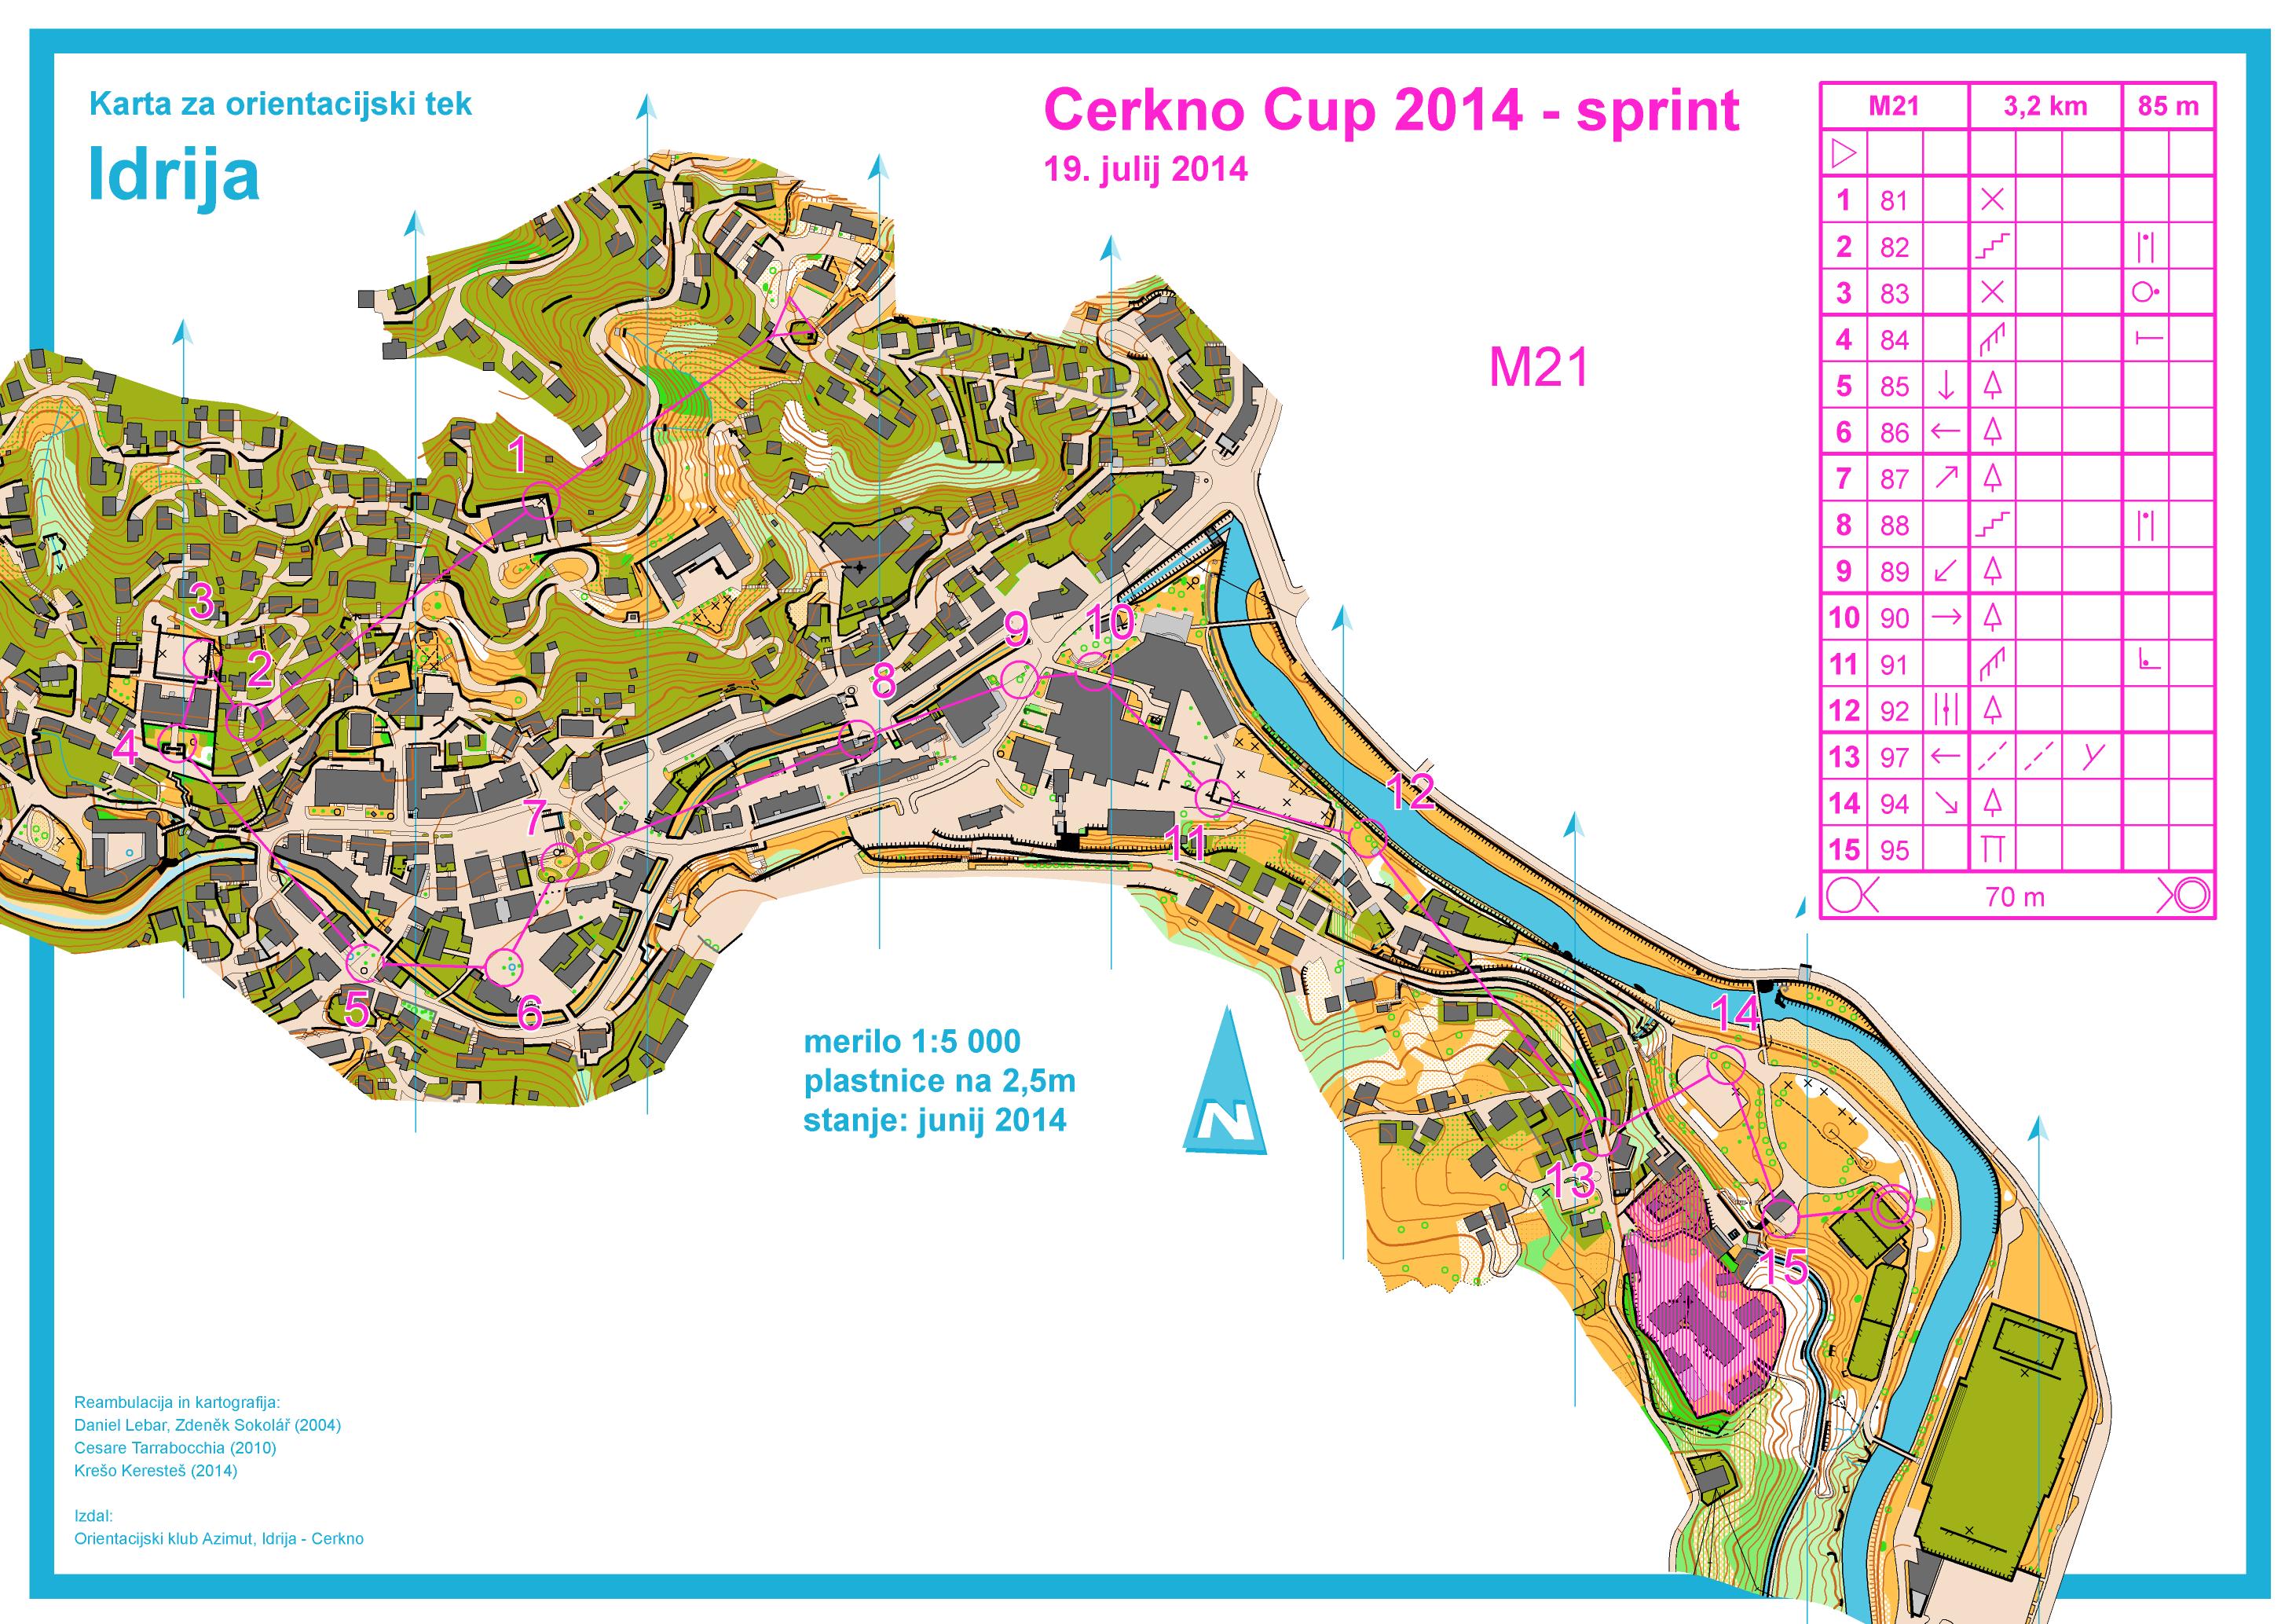 Cerkno Cup - Sprint (19-07-2014)